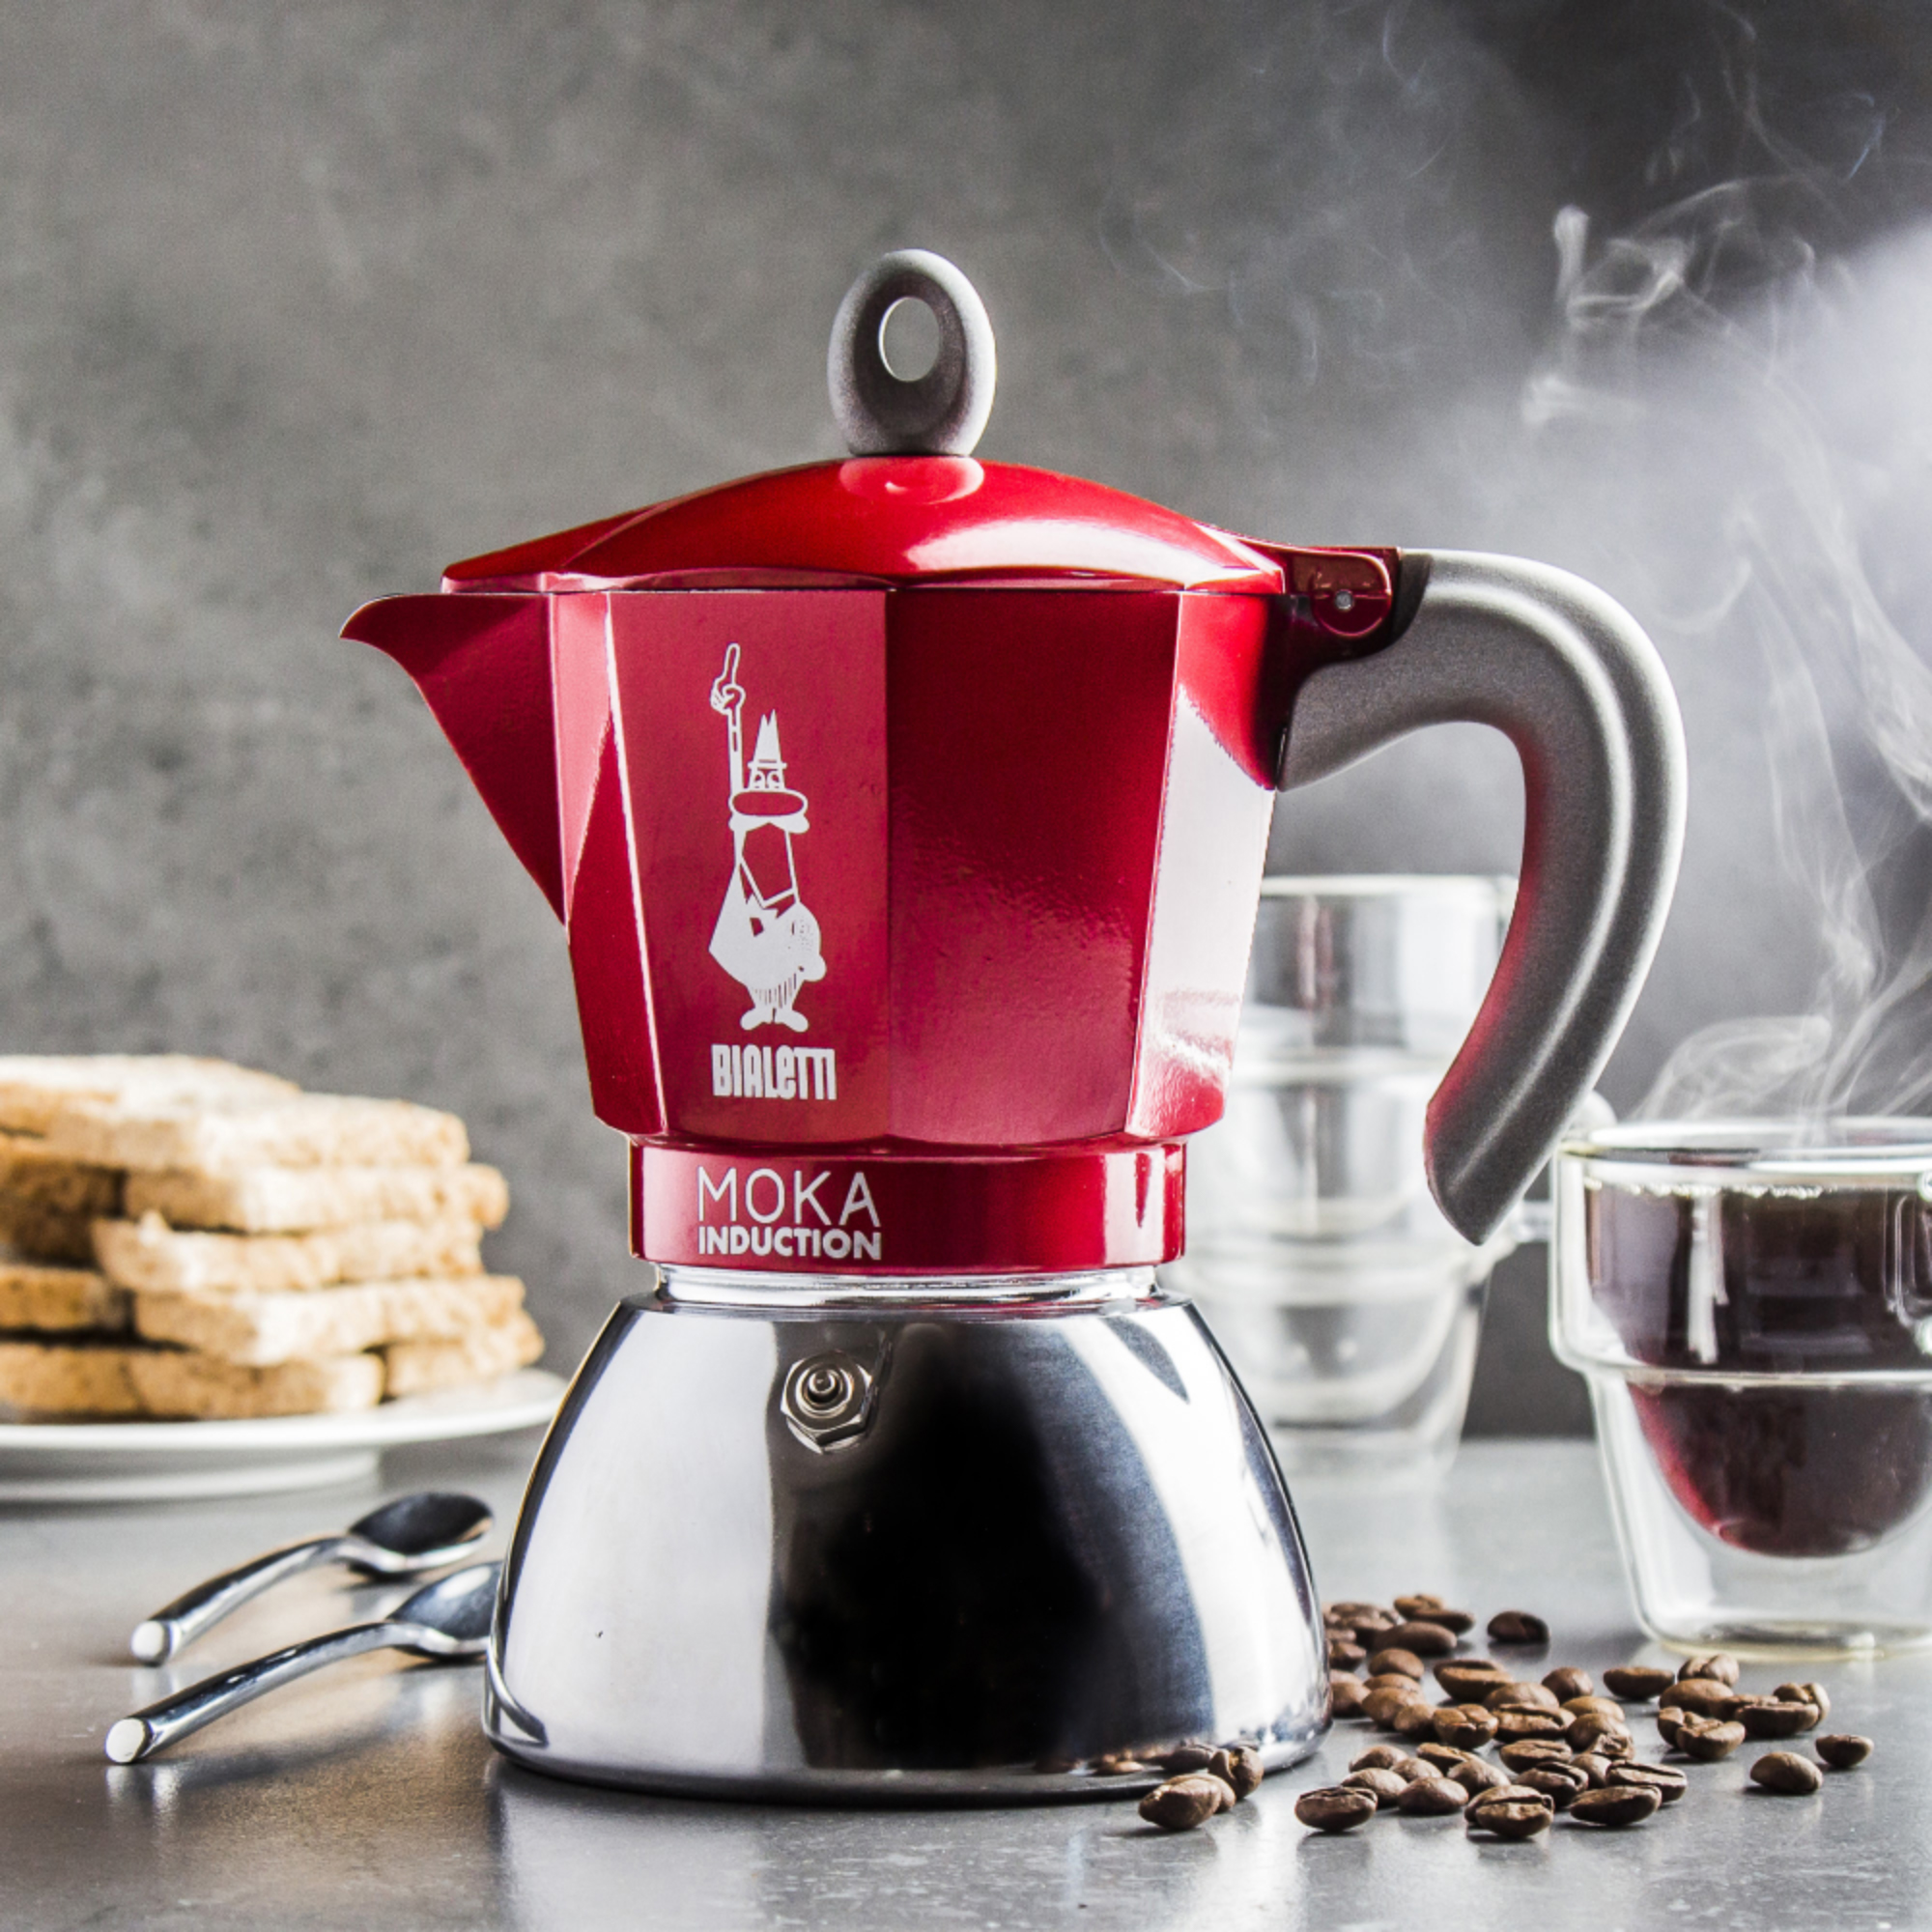 Bialetti Moka rood 4 percolator 190ml - Koffie met een Italiaans Espresso Aroma☕ - GotDeal